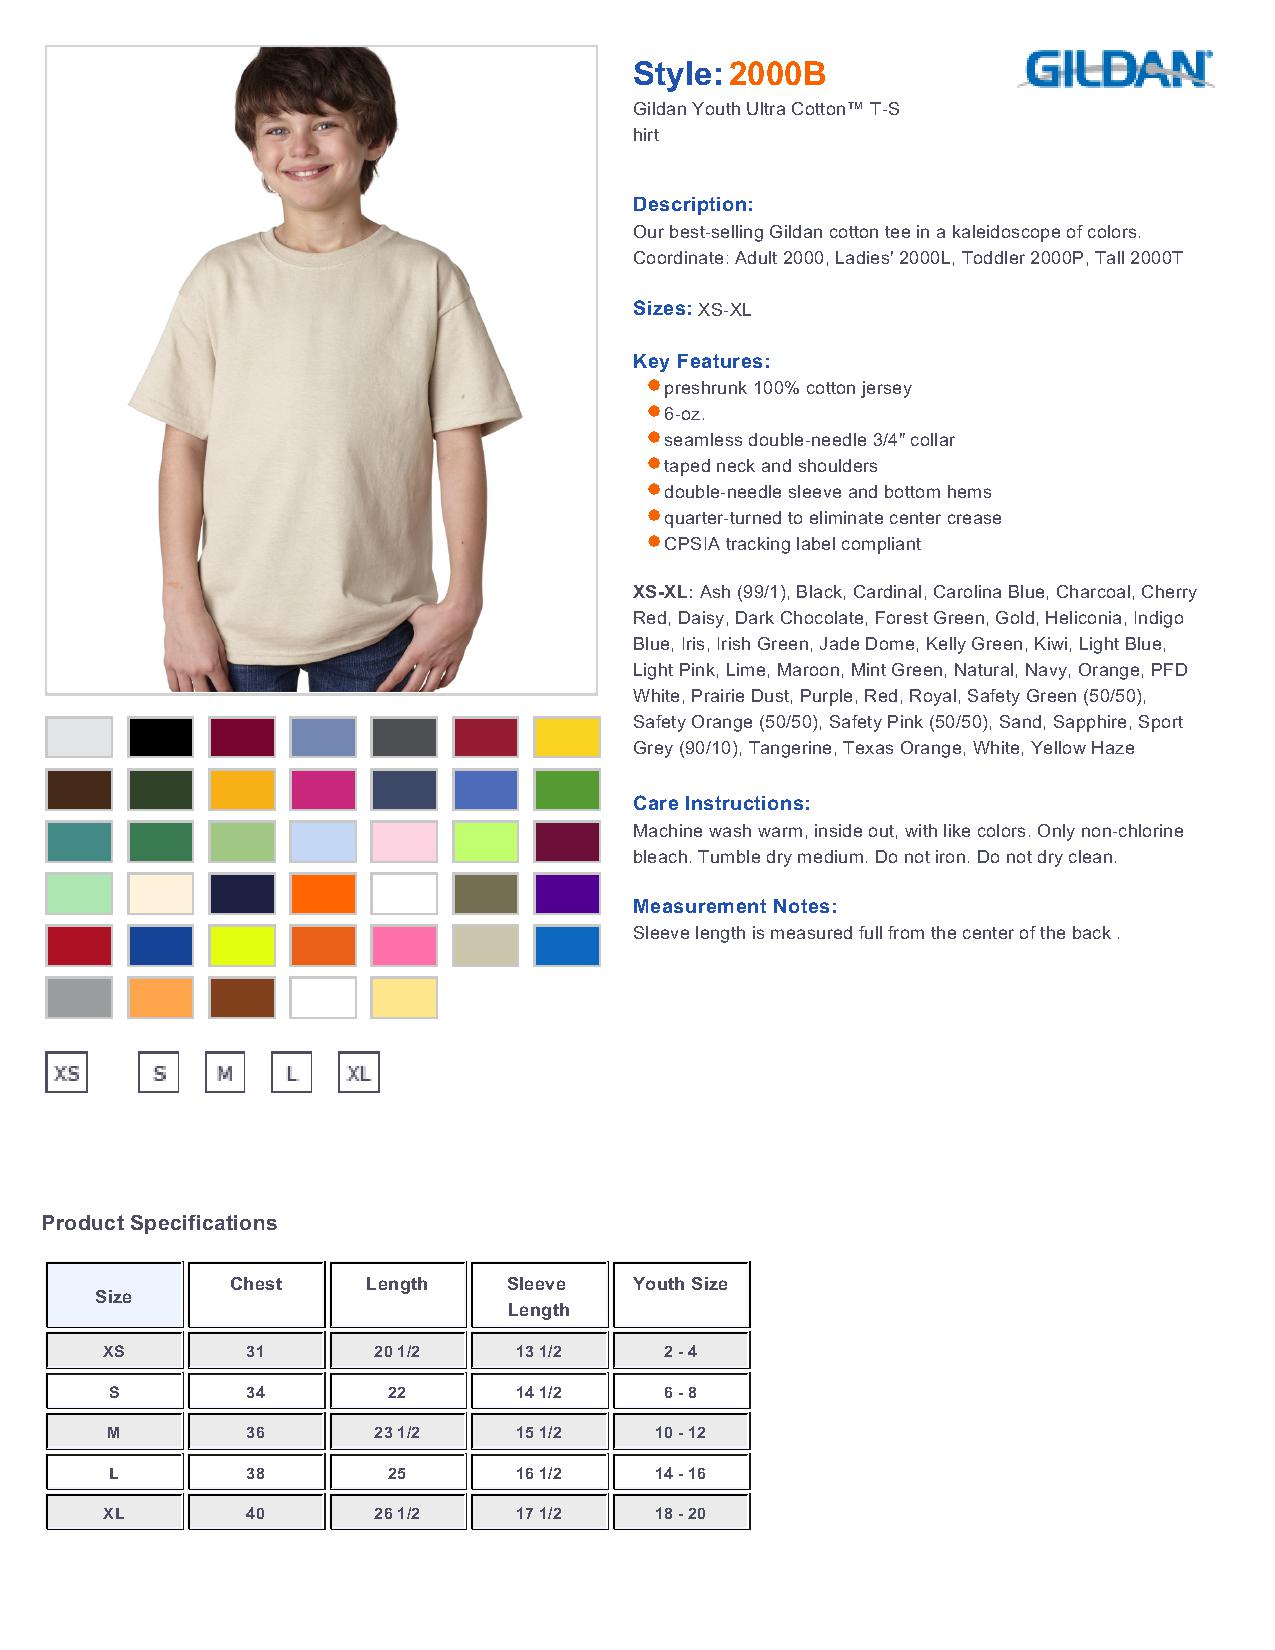 Gildan Raglan Color Chart